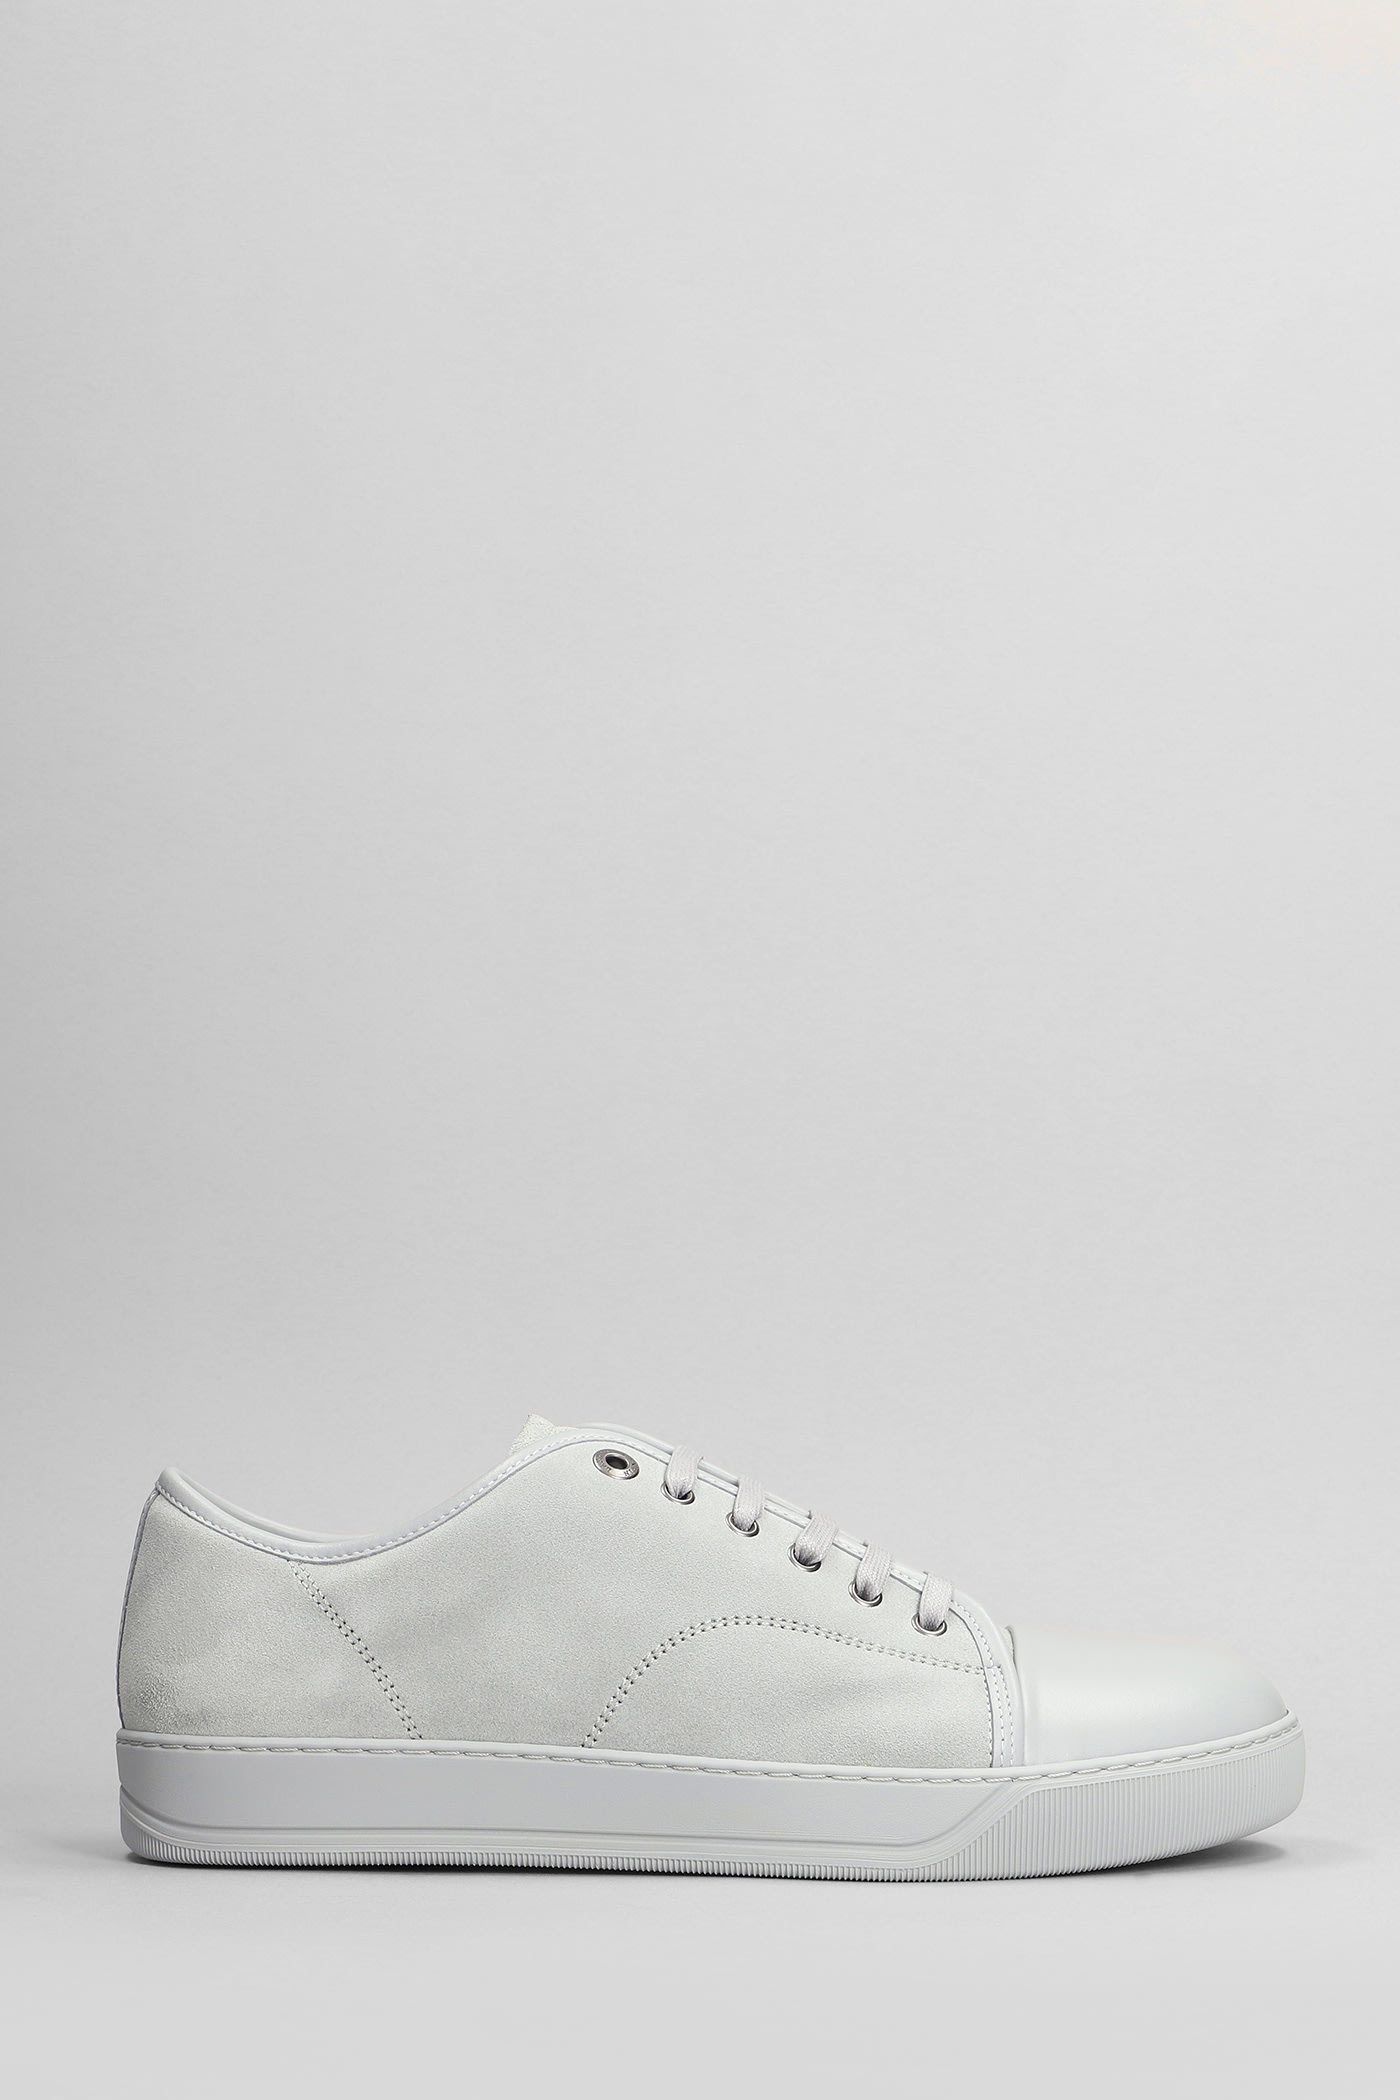 Lanvin Dbb1 Sneakers In Grey Suede In Gray